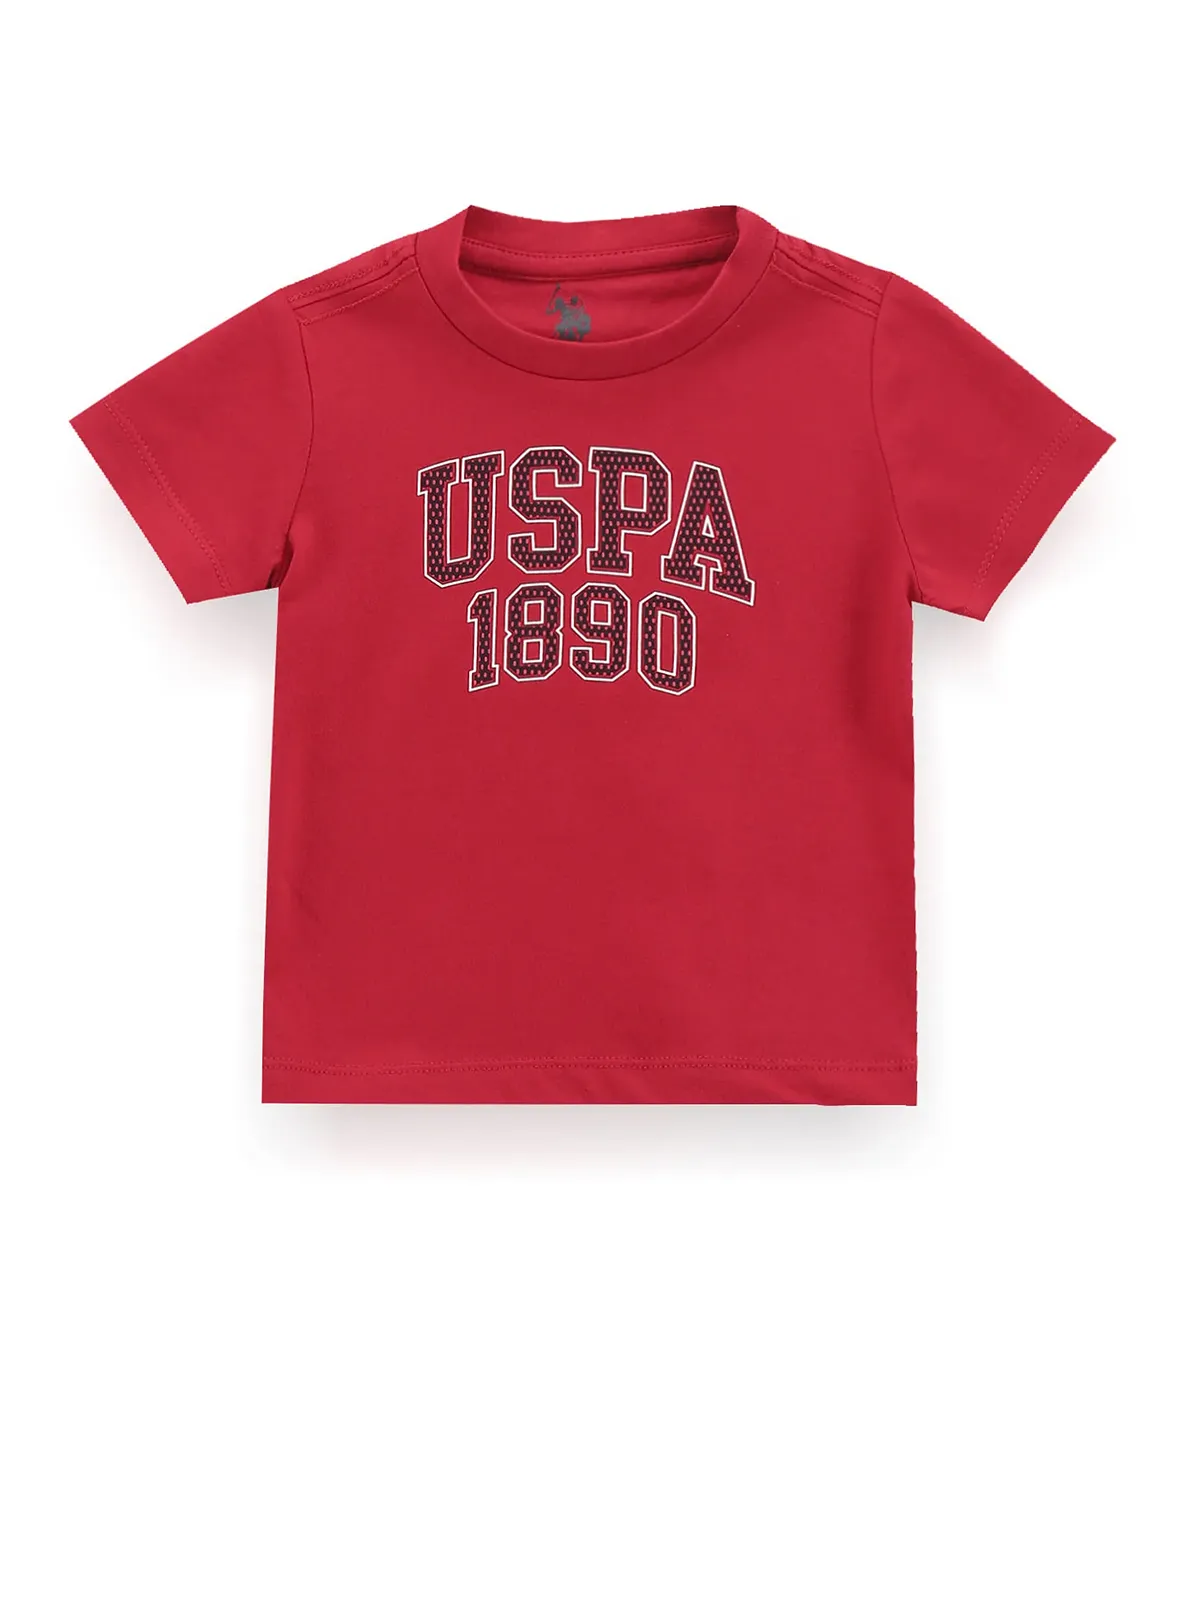 U S POLO ASSN red plain cotton casual t-shirt